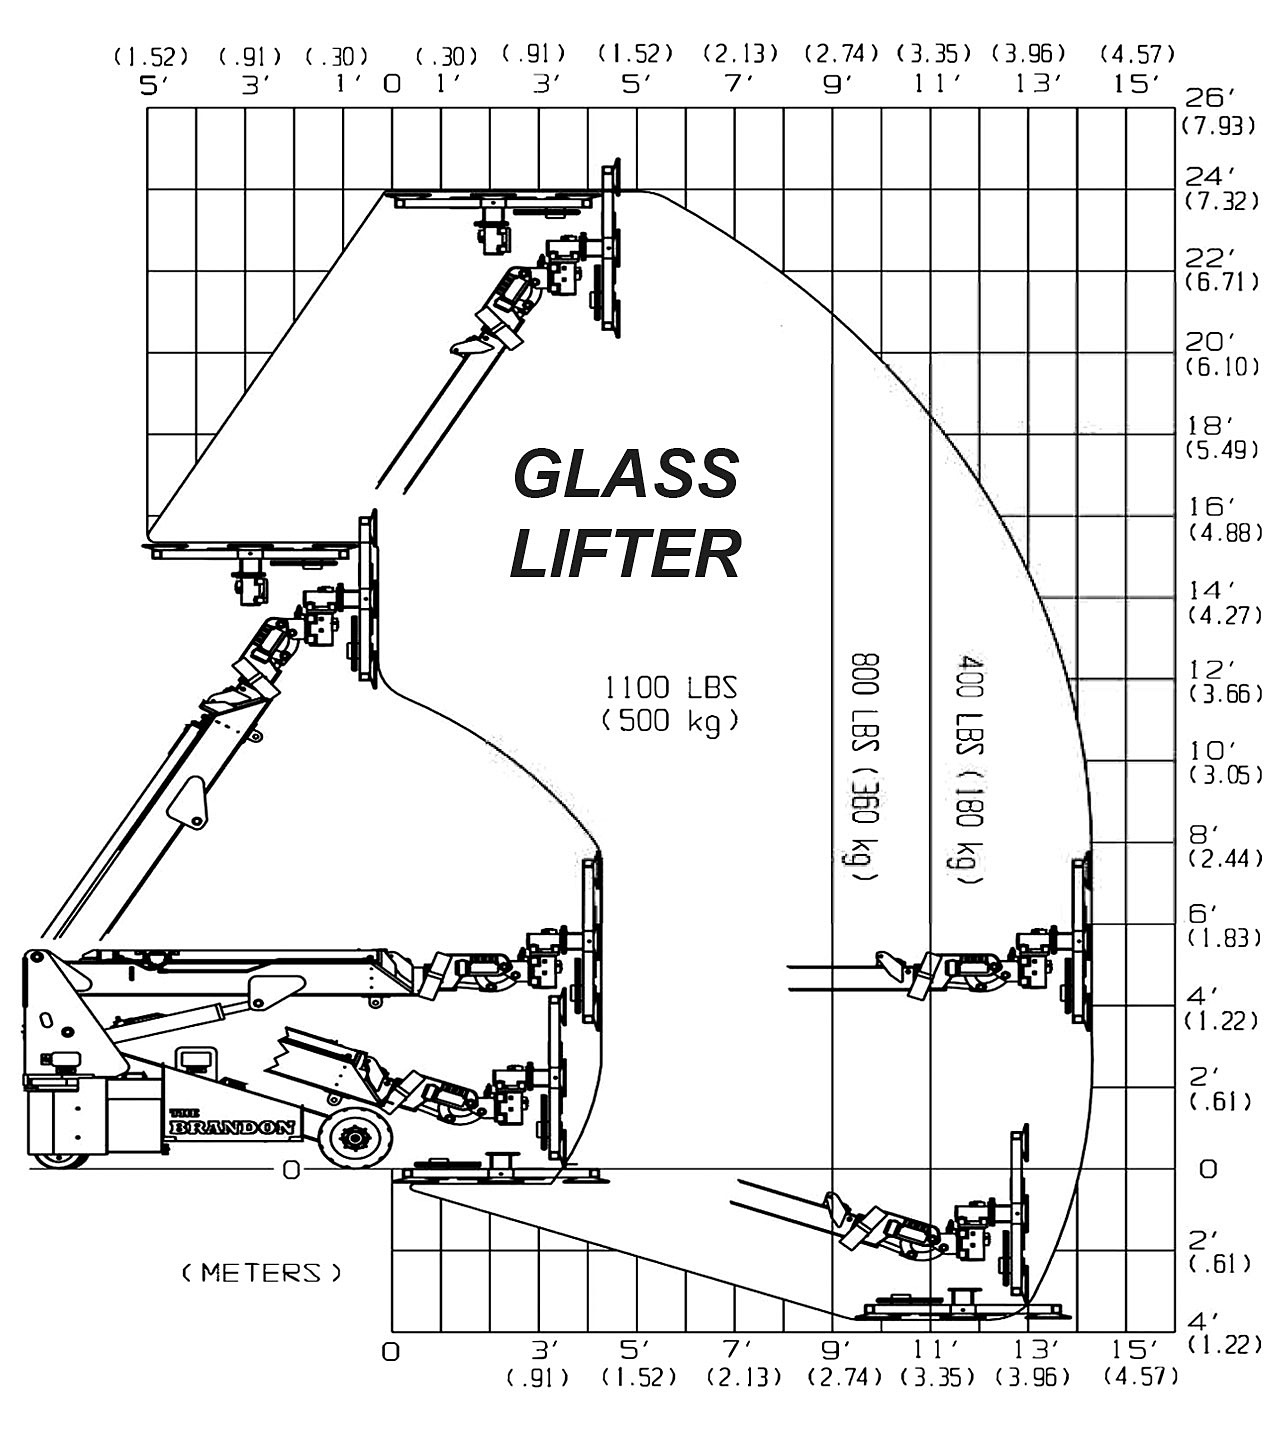 The Brandon 6E Glass Lifter Load Capacity